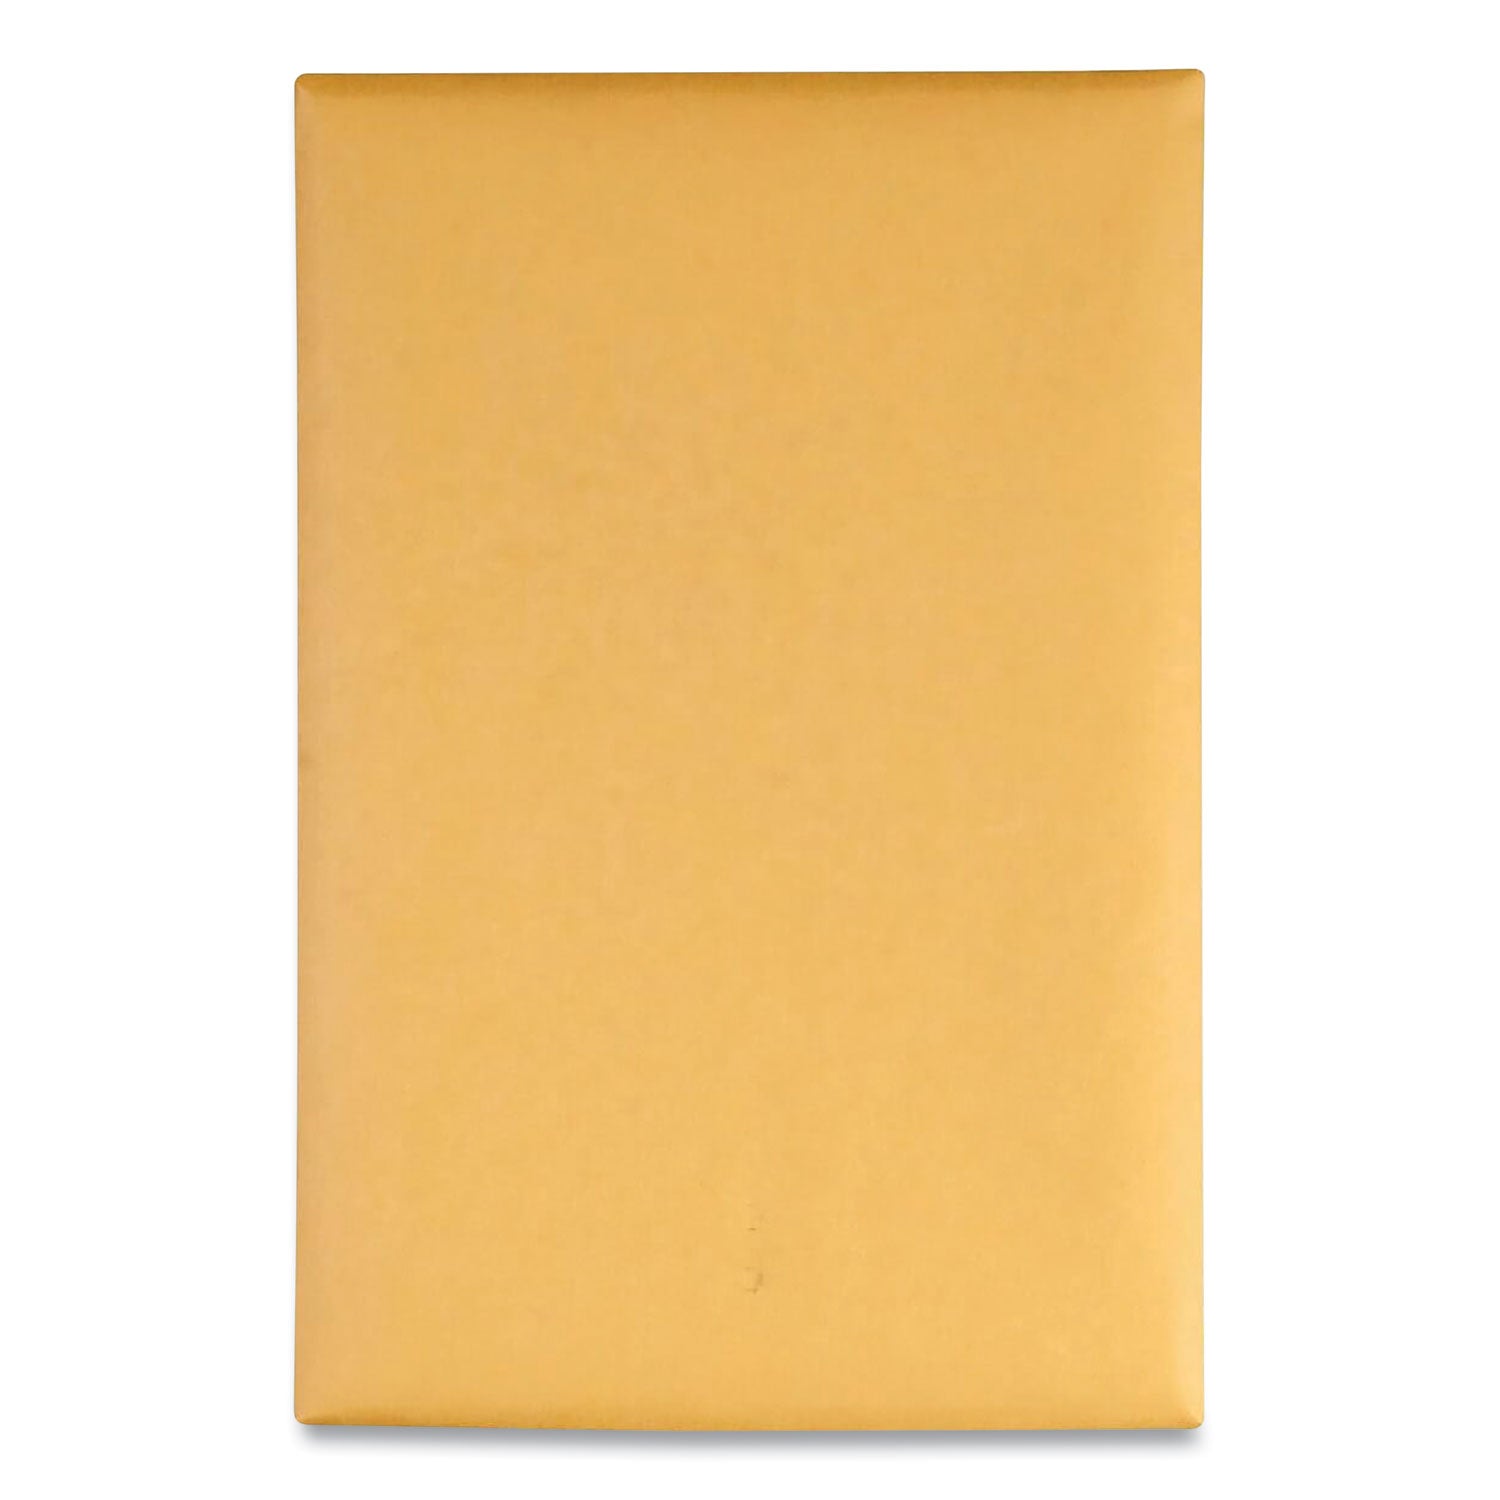 Clasp Envelope, 28 lb Bond Weight Kraft, #55, Square Flap, Clasp/Gummed Closure, 6 x 9, Brown Kraft, 100/Box - 